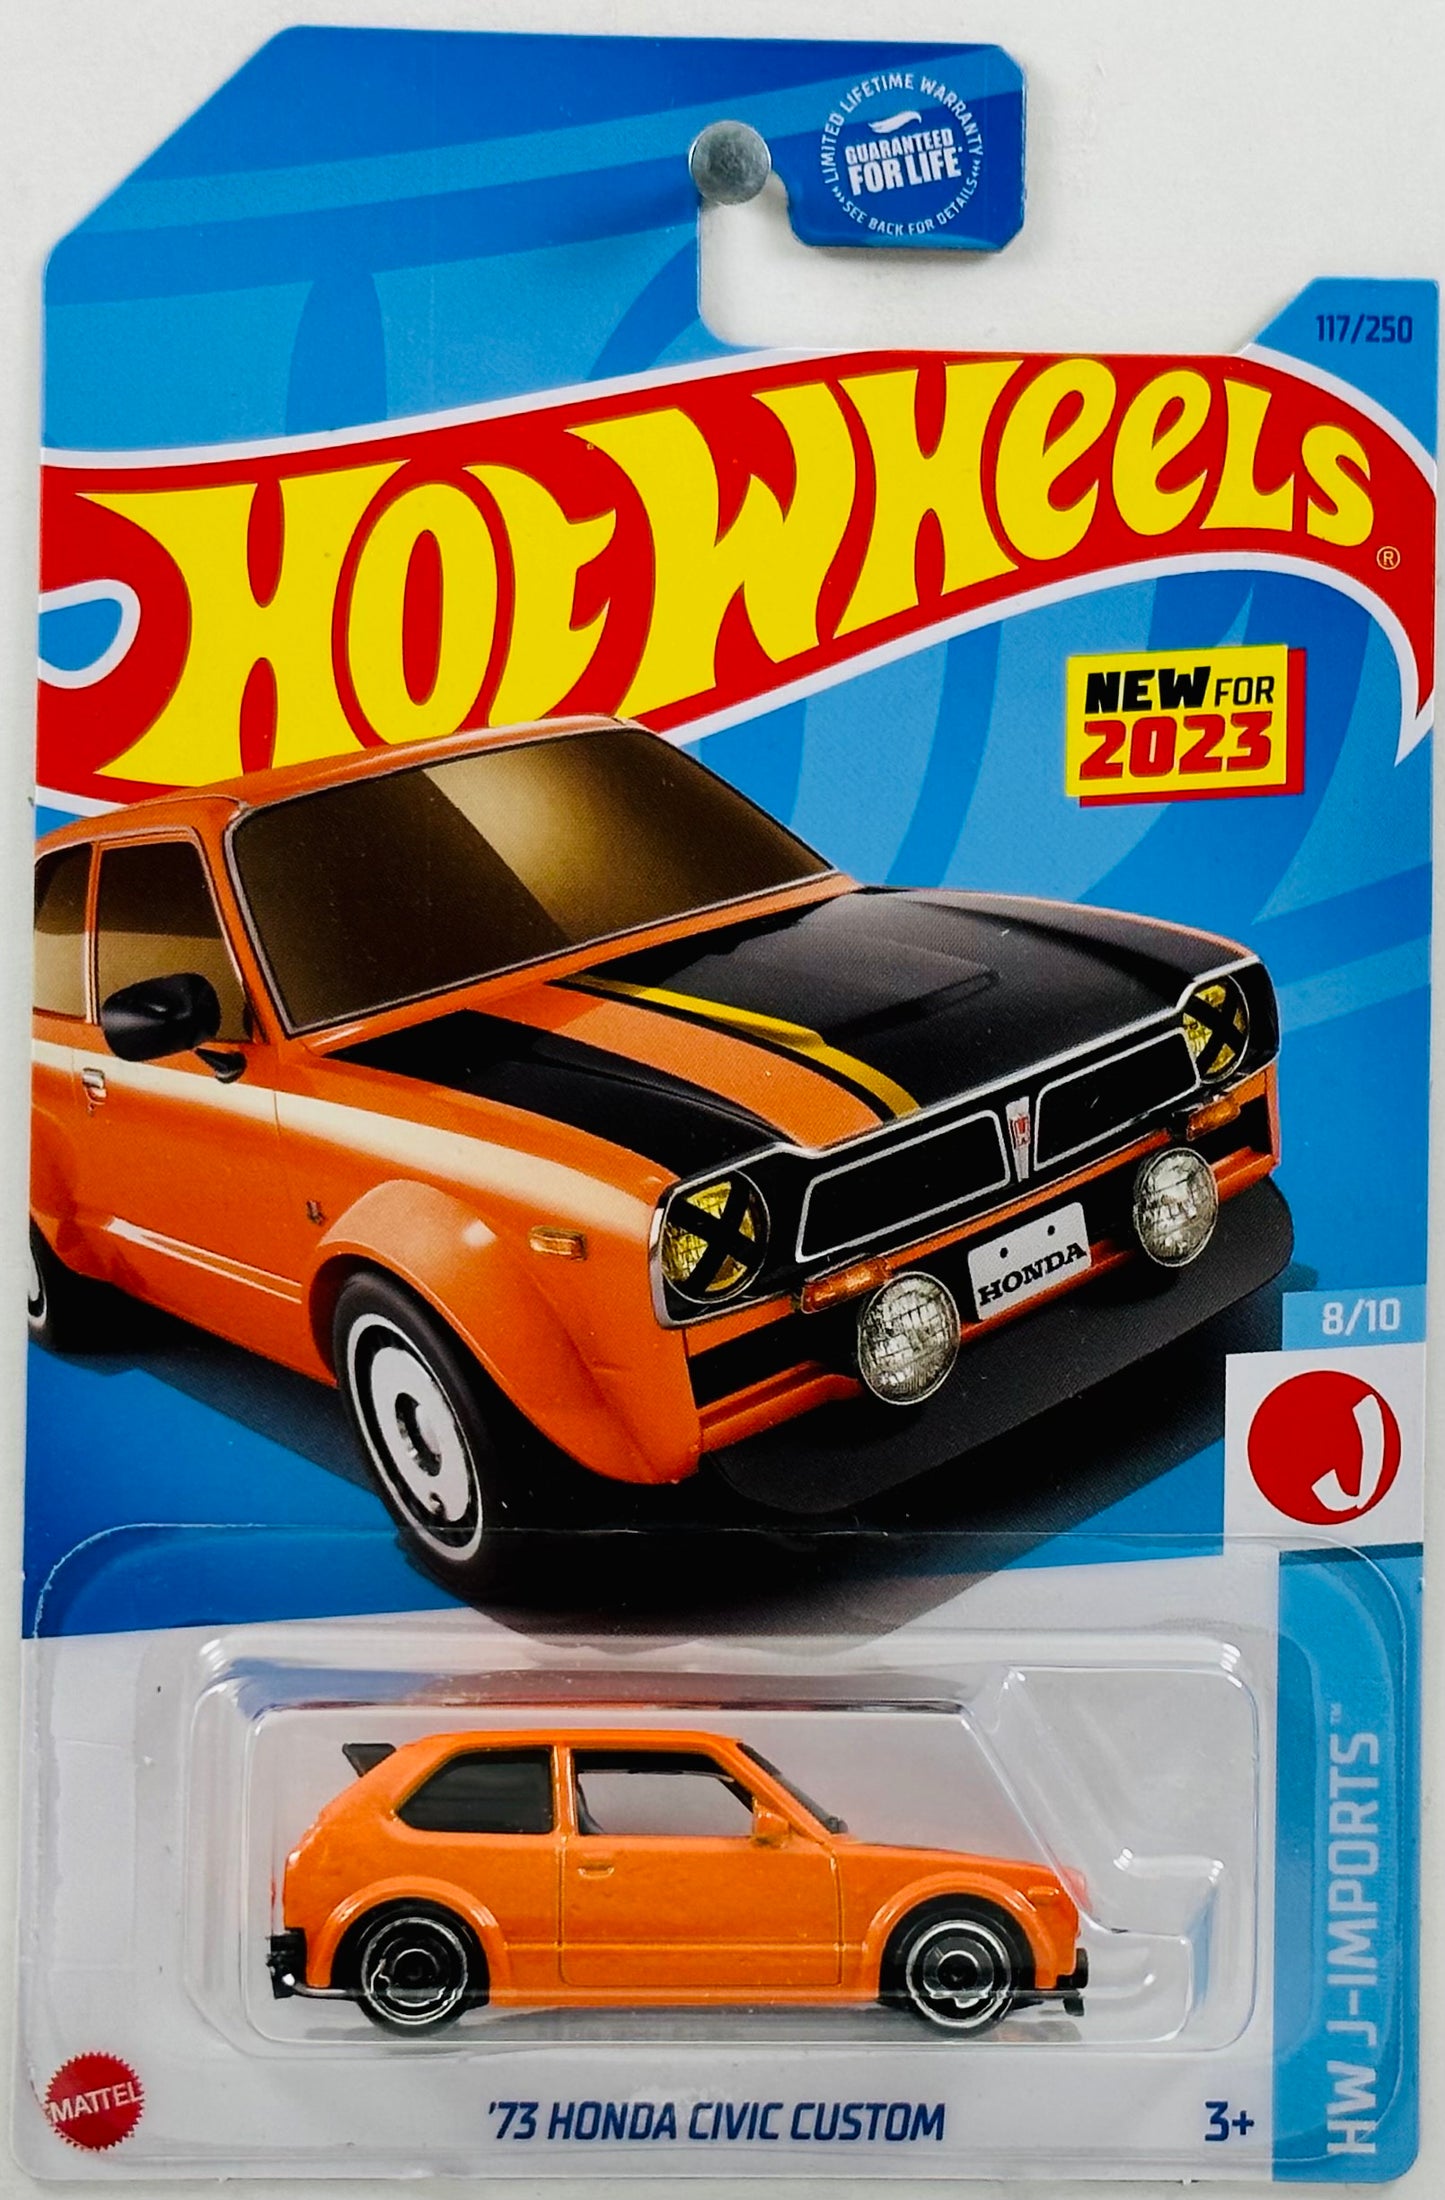 Hot Wheels 2023 - Collector # 117/250 - HW J-Imports 08/10 - New Models - '73 Honda Civic Custom - Orange - USA